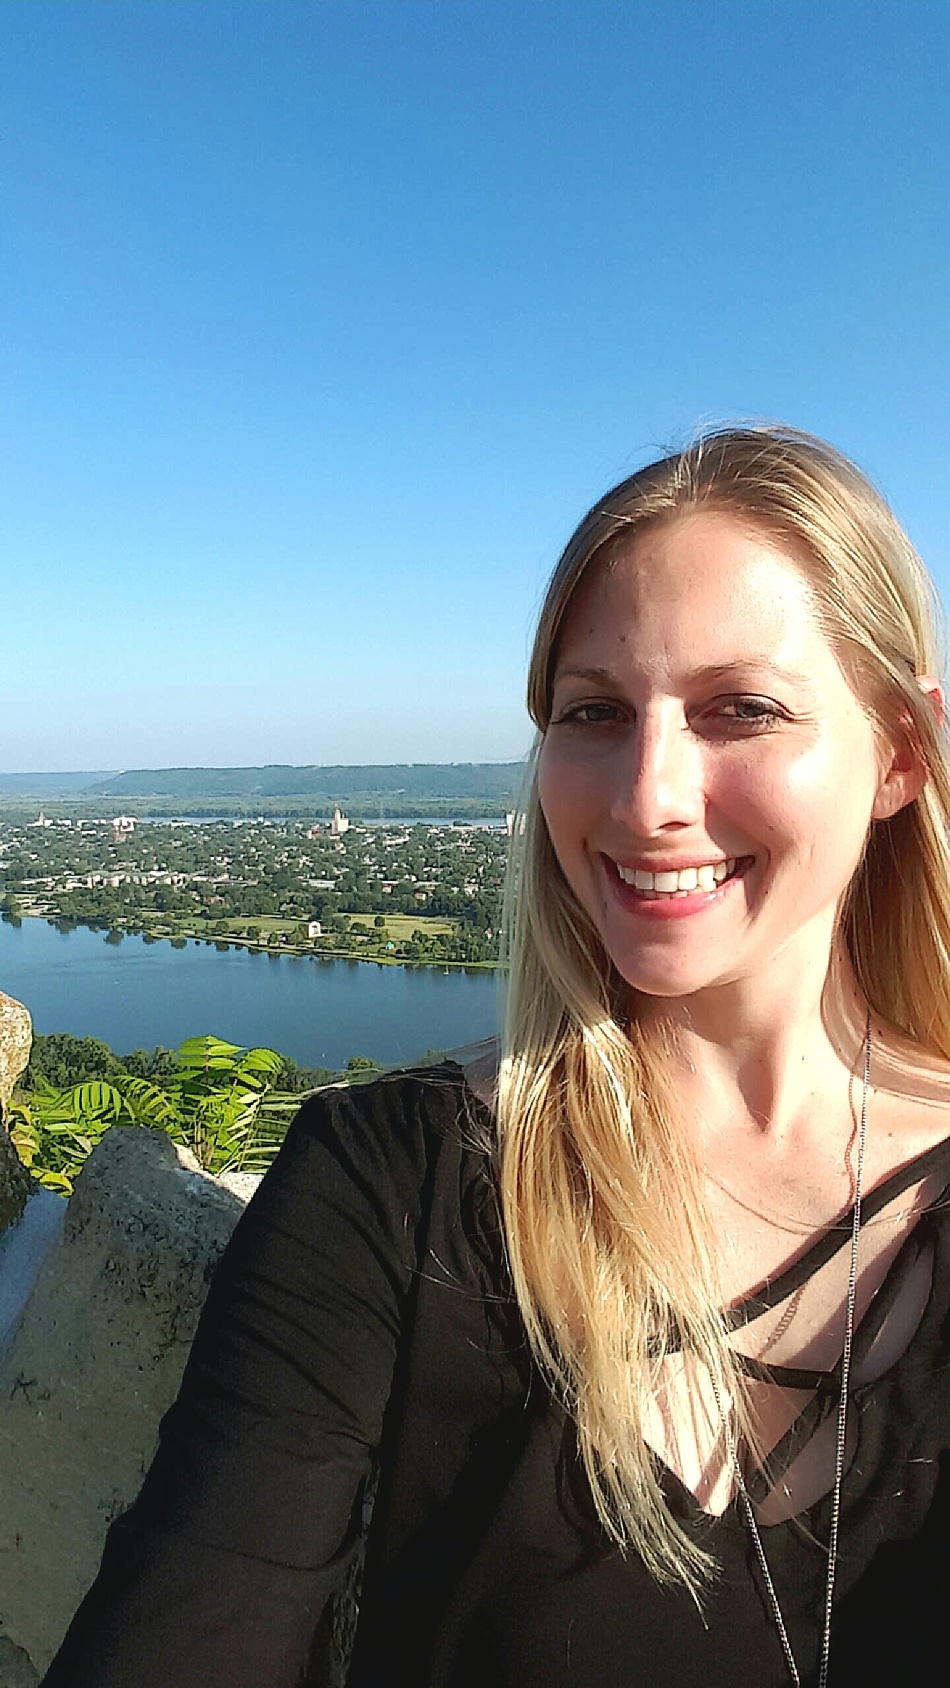 Selfie at the Mississippi River